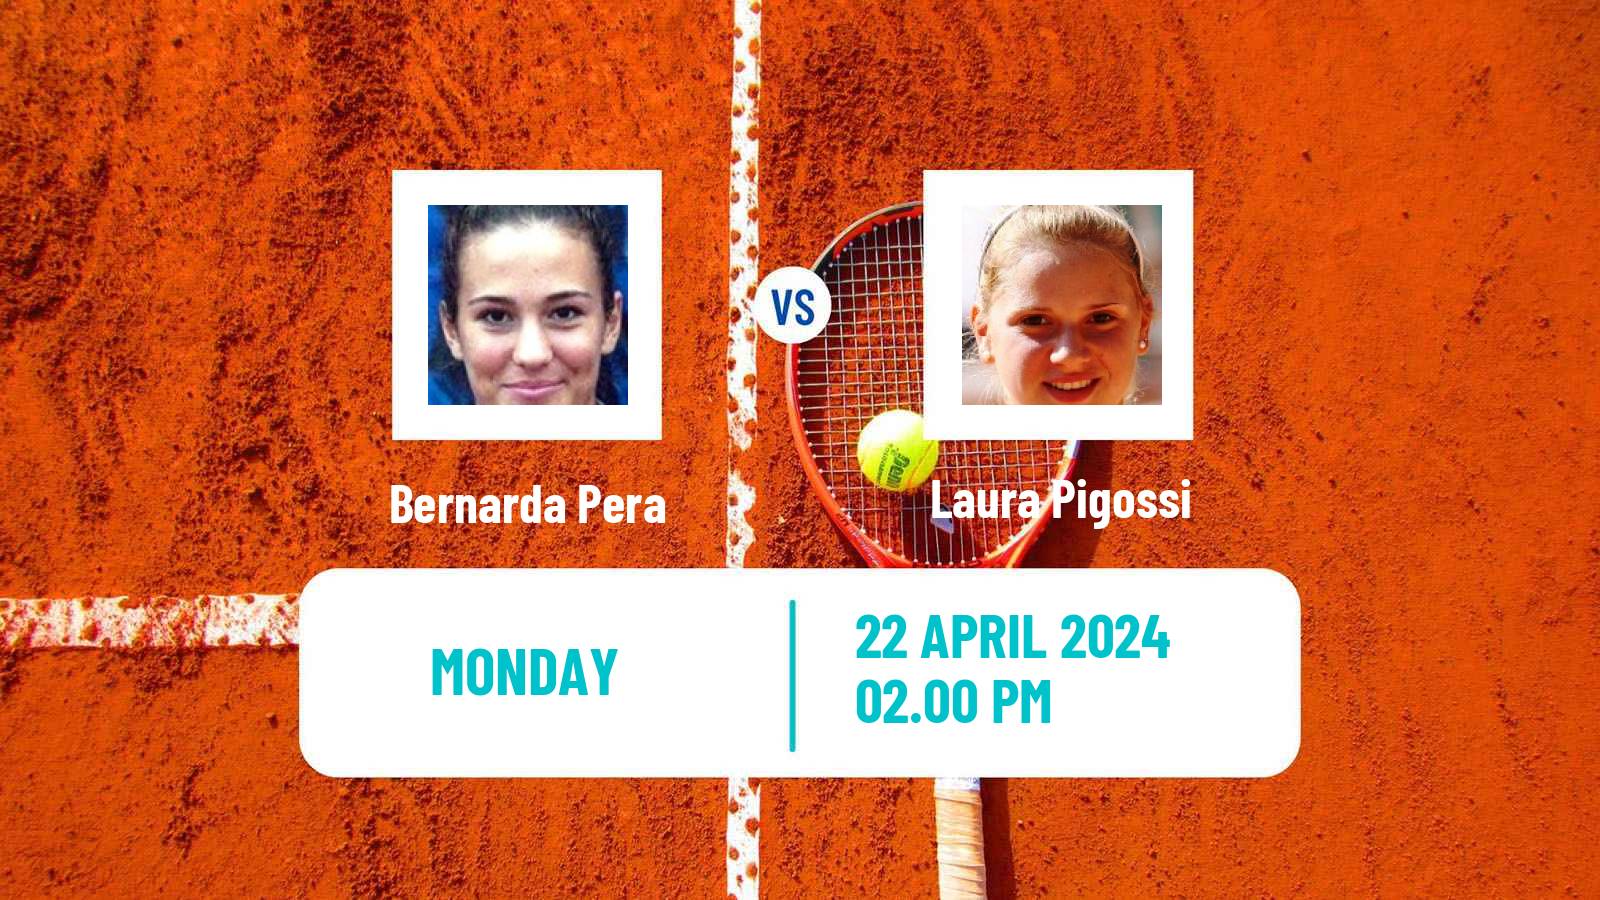 Tennis WTA Madrid Bernarda Pera - Laura Pigossi